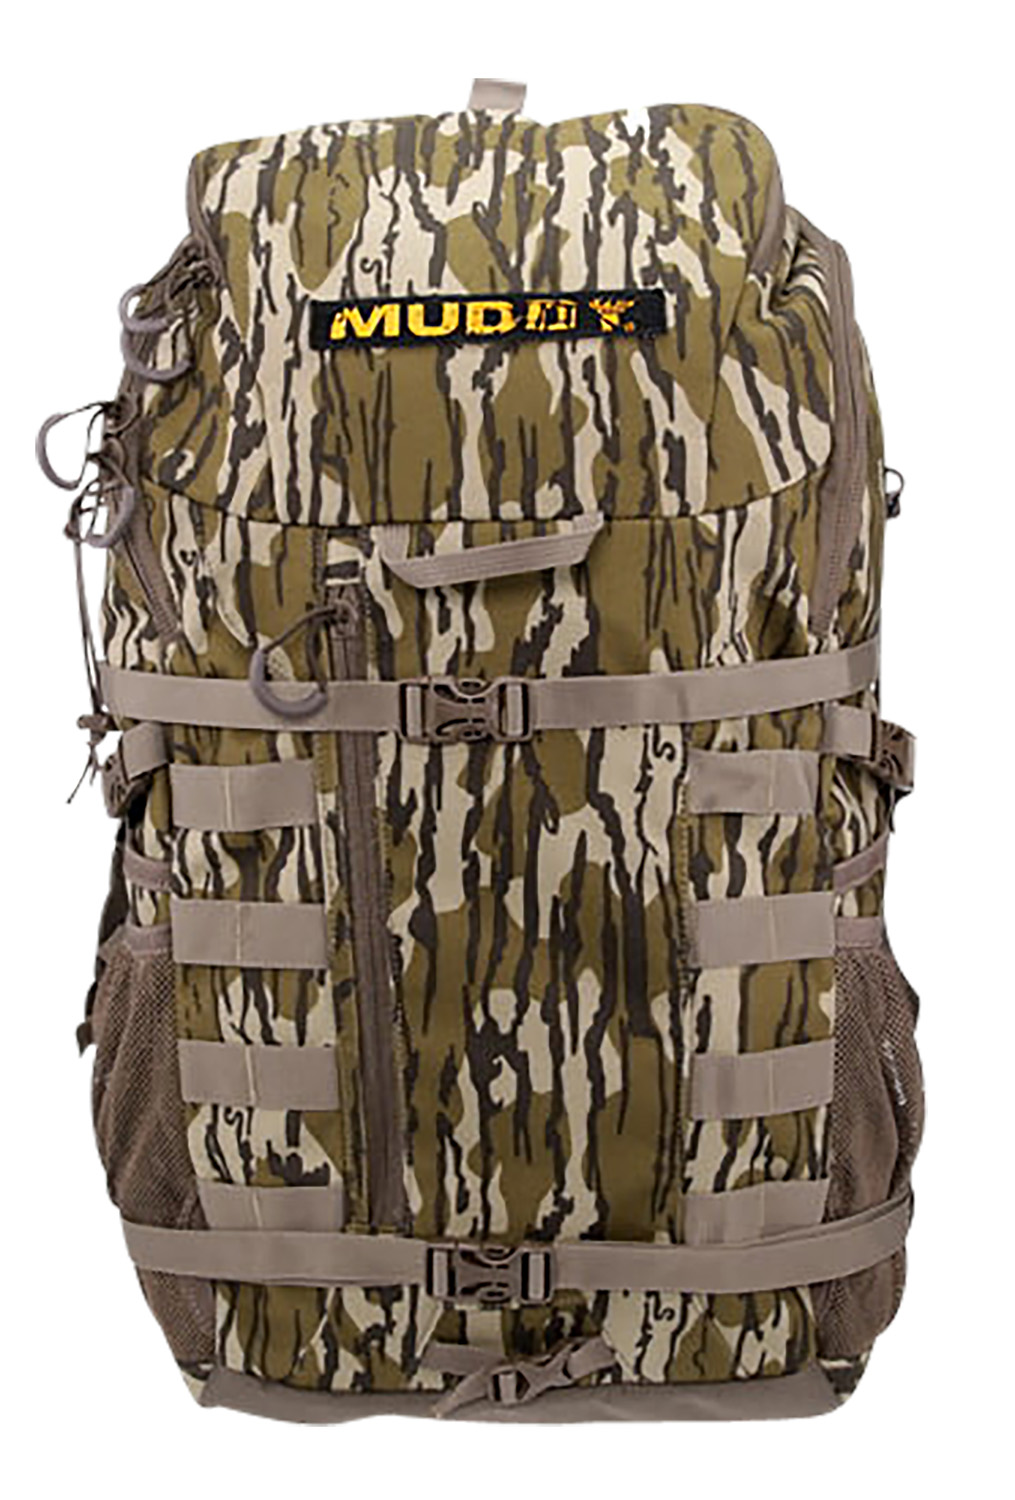 Muddy Mud-BPK-1500MO Pro 1500 Hunting Pack Mossy Oak Bottomland Polyester Zipper/Buckles Closure